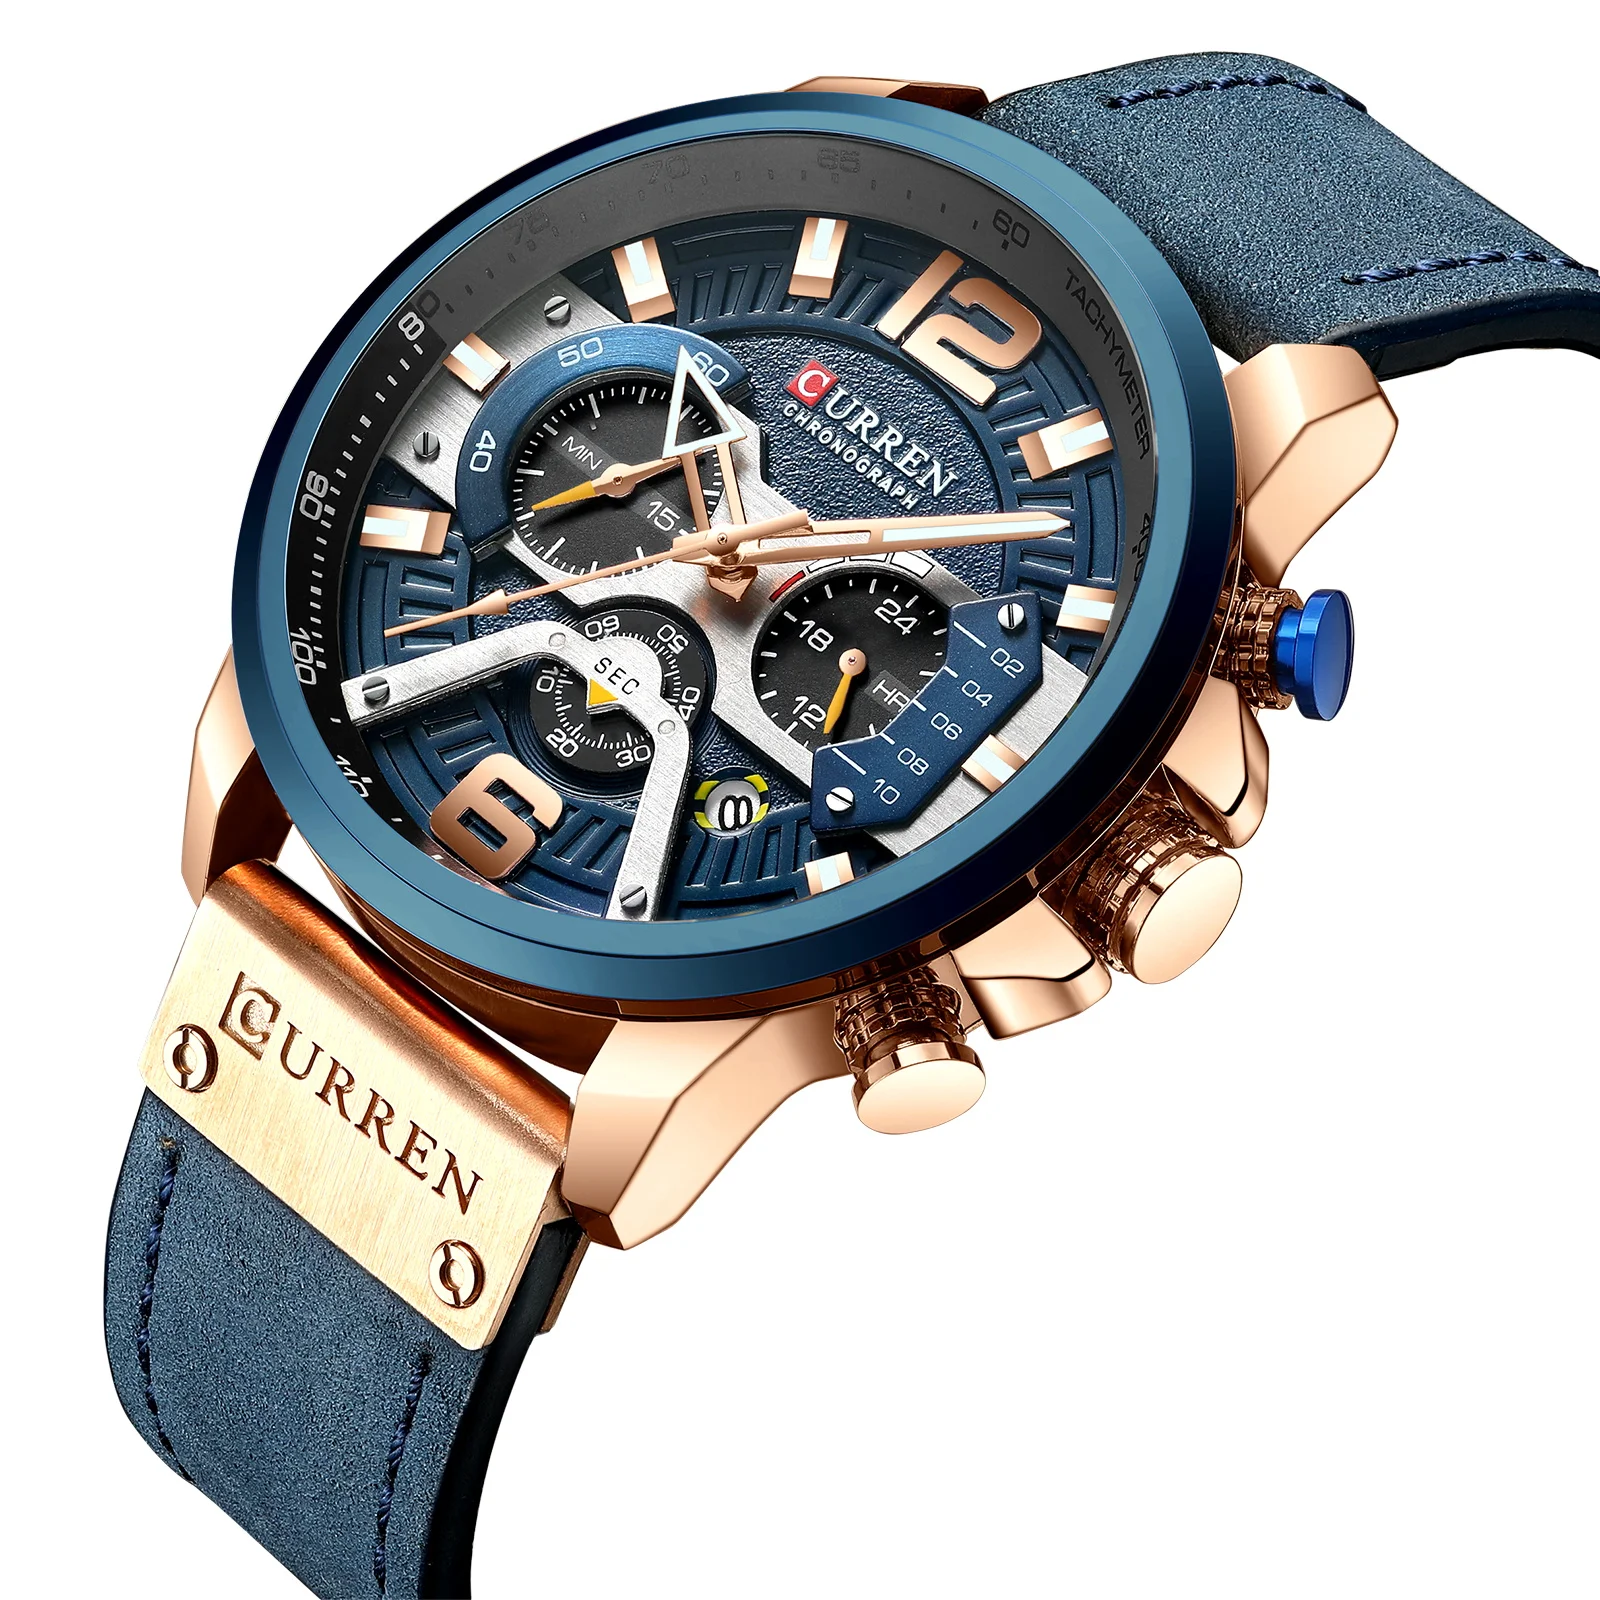 

CURREN 8329 Luxury Brand Quartz Men Watch Military Waterproof Leather Strap Sport Mens Watches Fashion Casual Male Clock